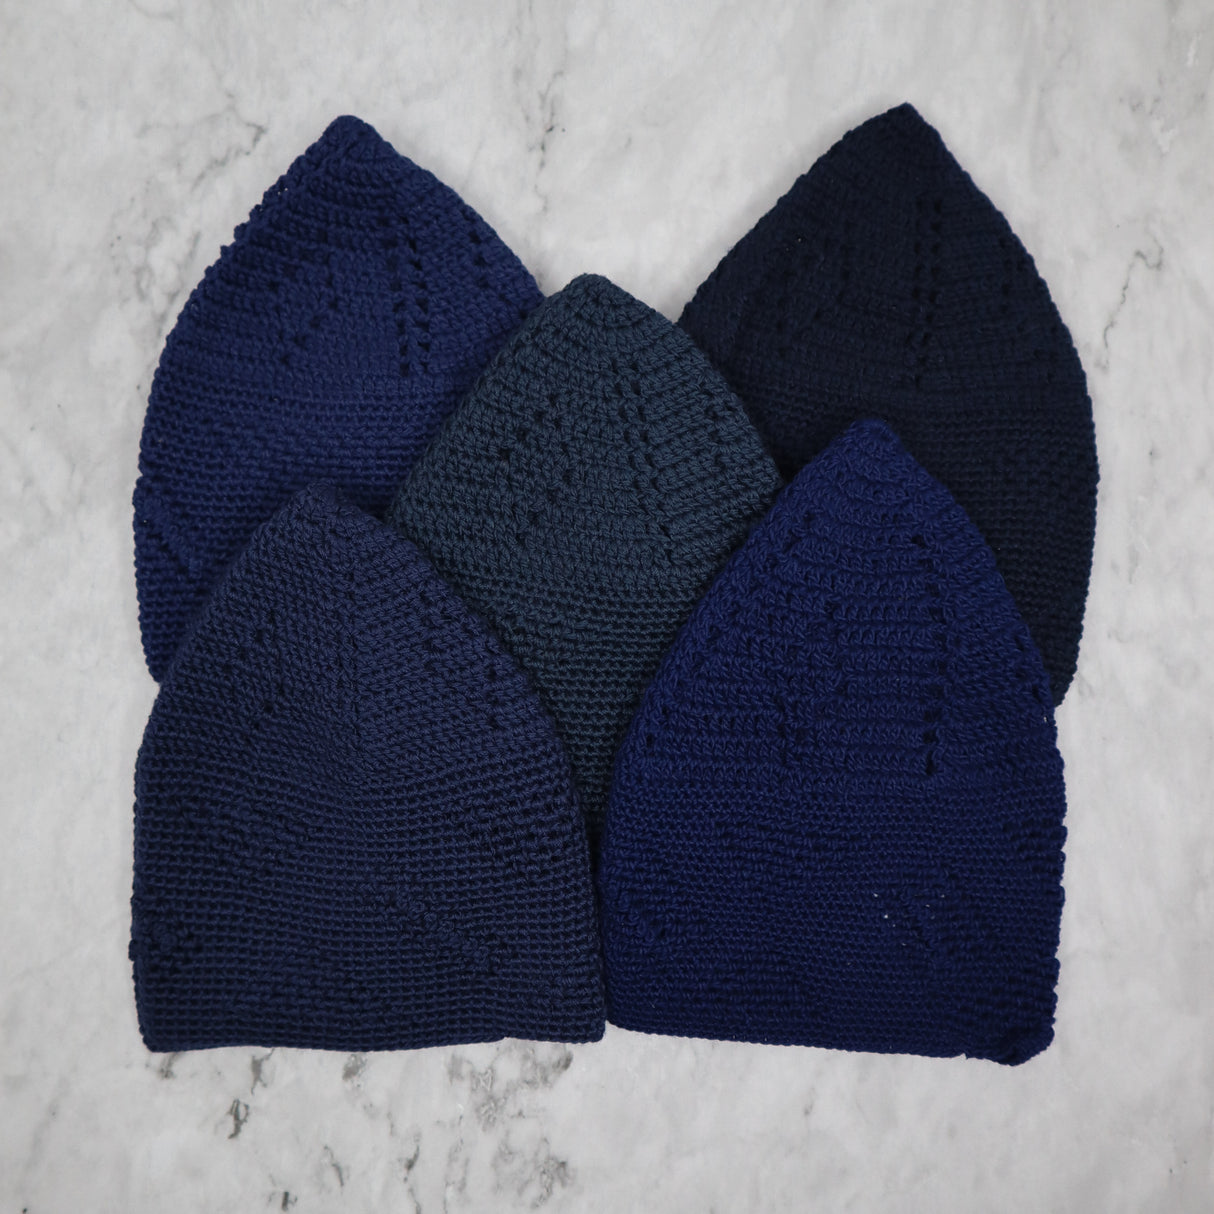 Men's Crochet Knit Kufi Cap - NAVY